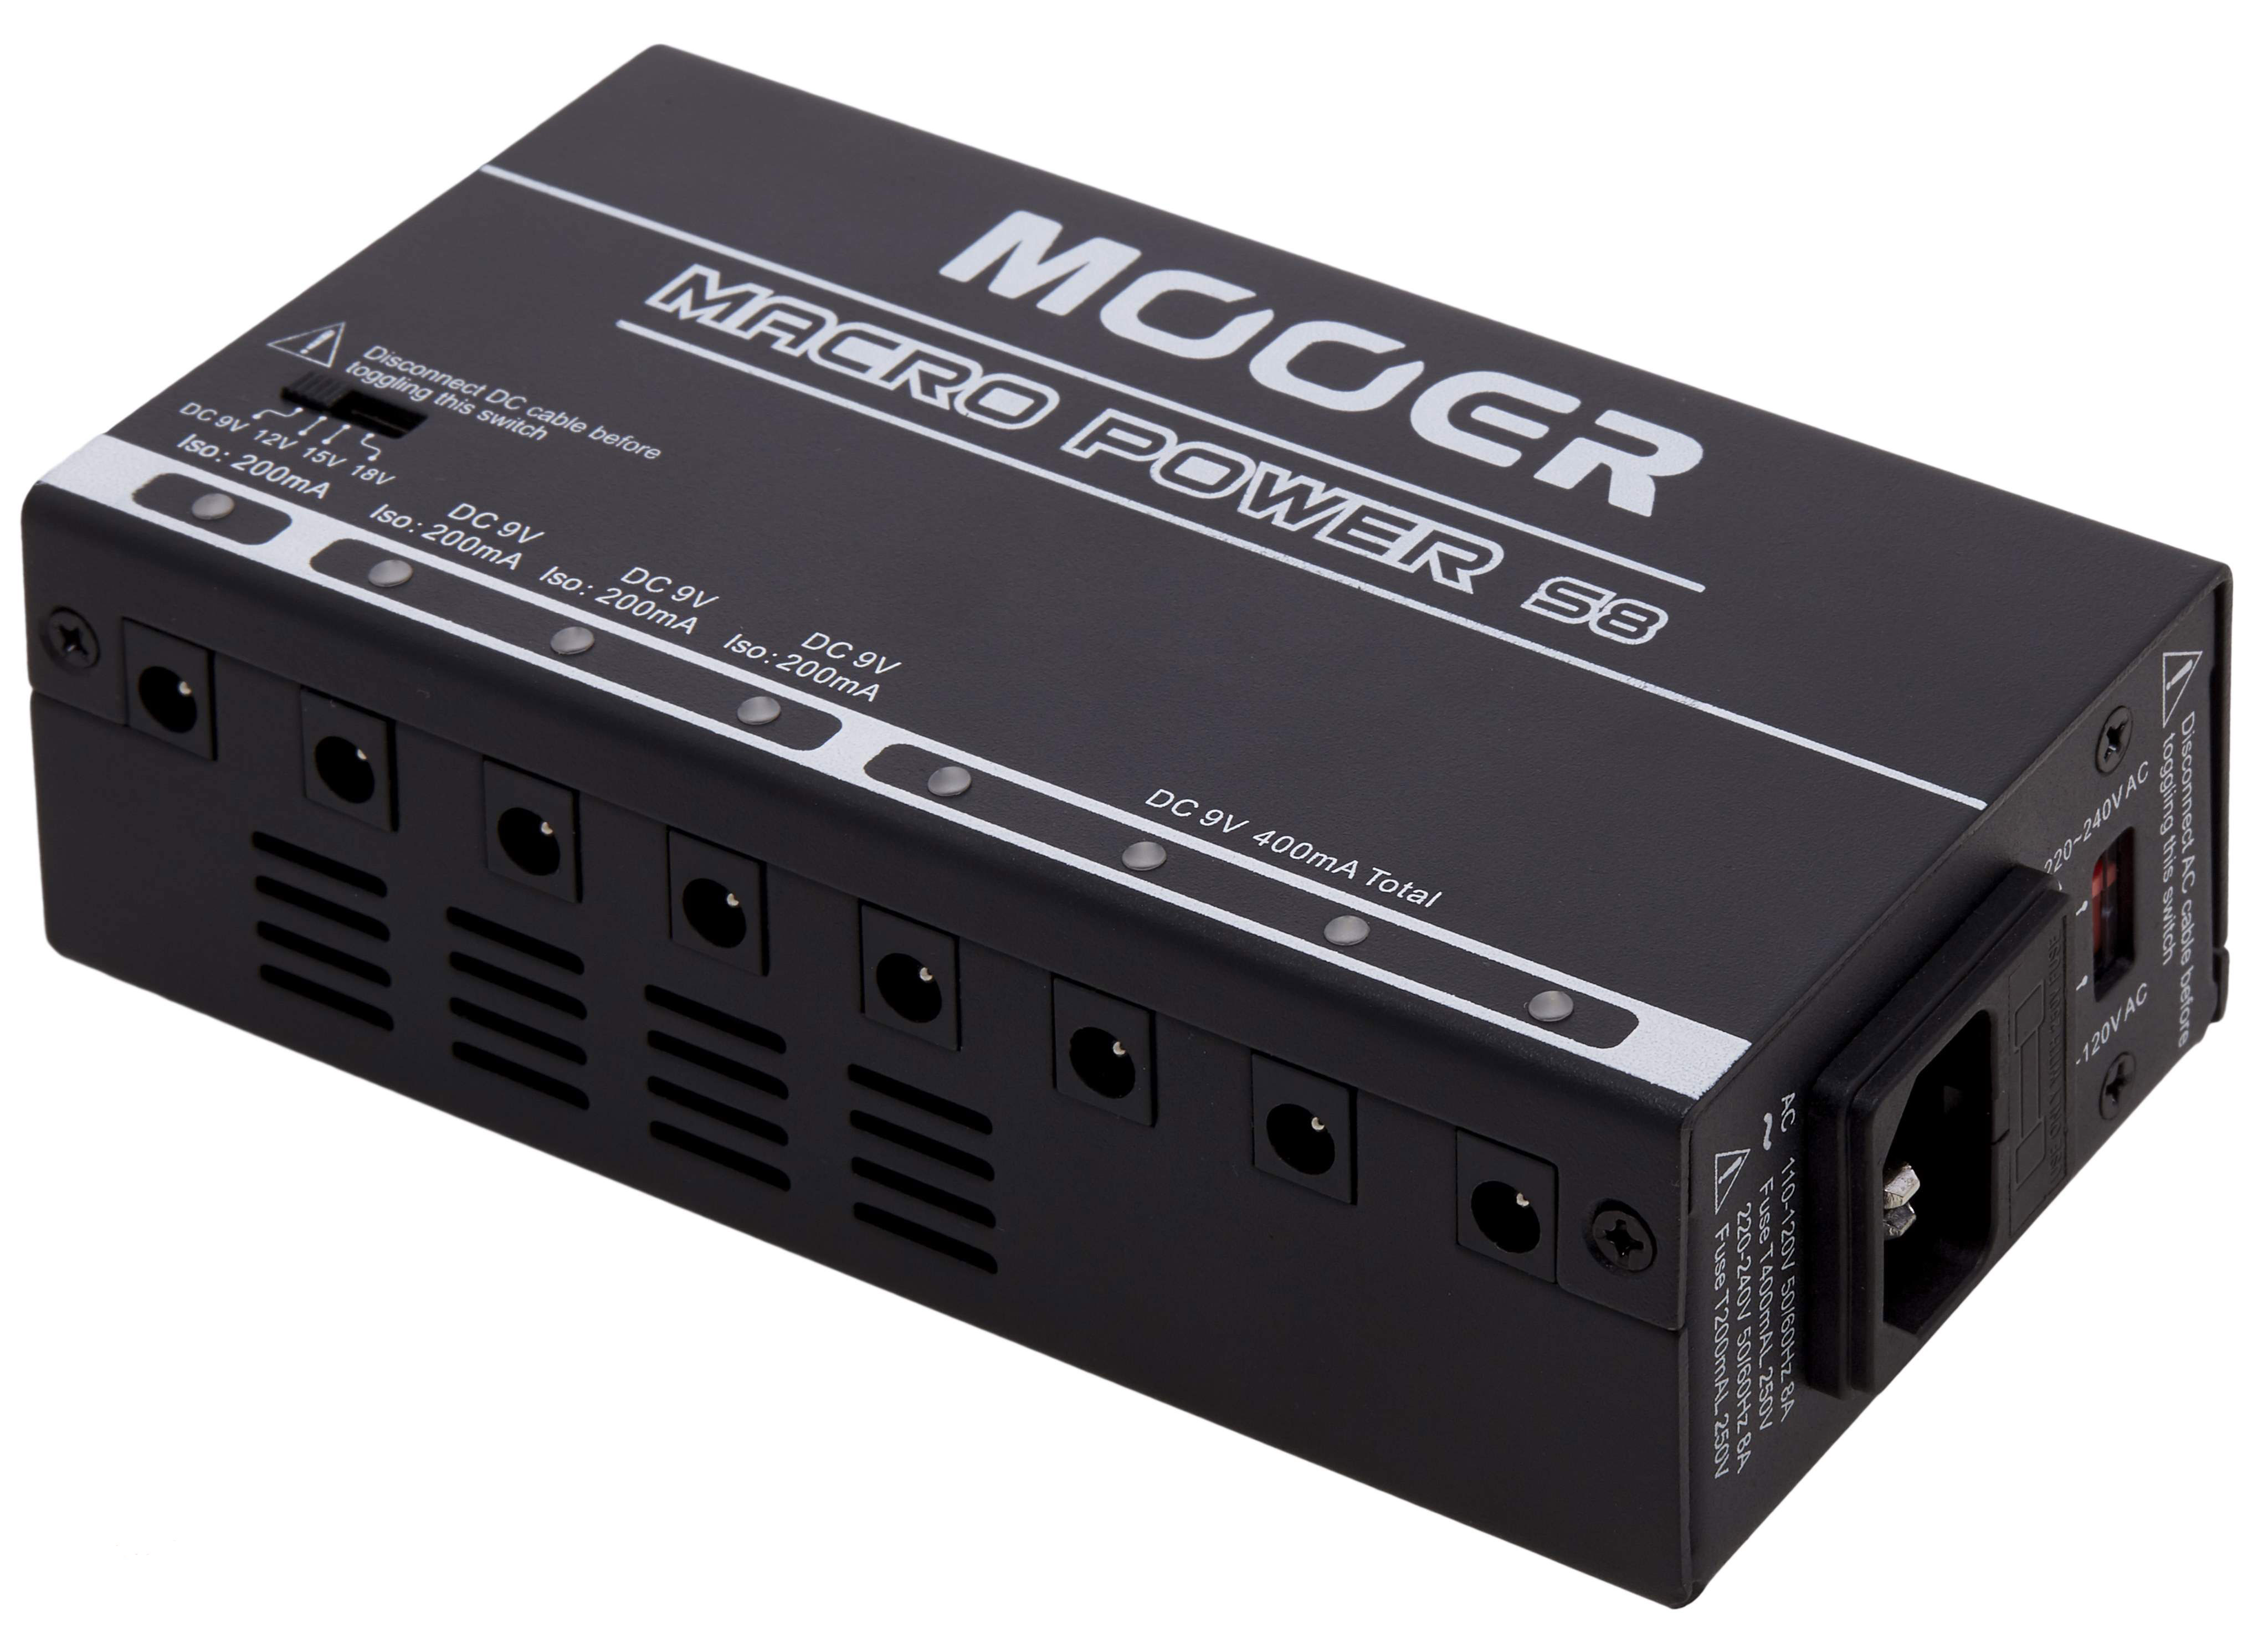 Mooer Macro Power S8 по цене 5 031 ₽